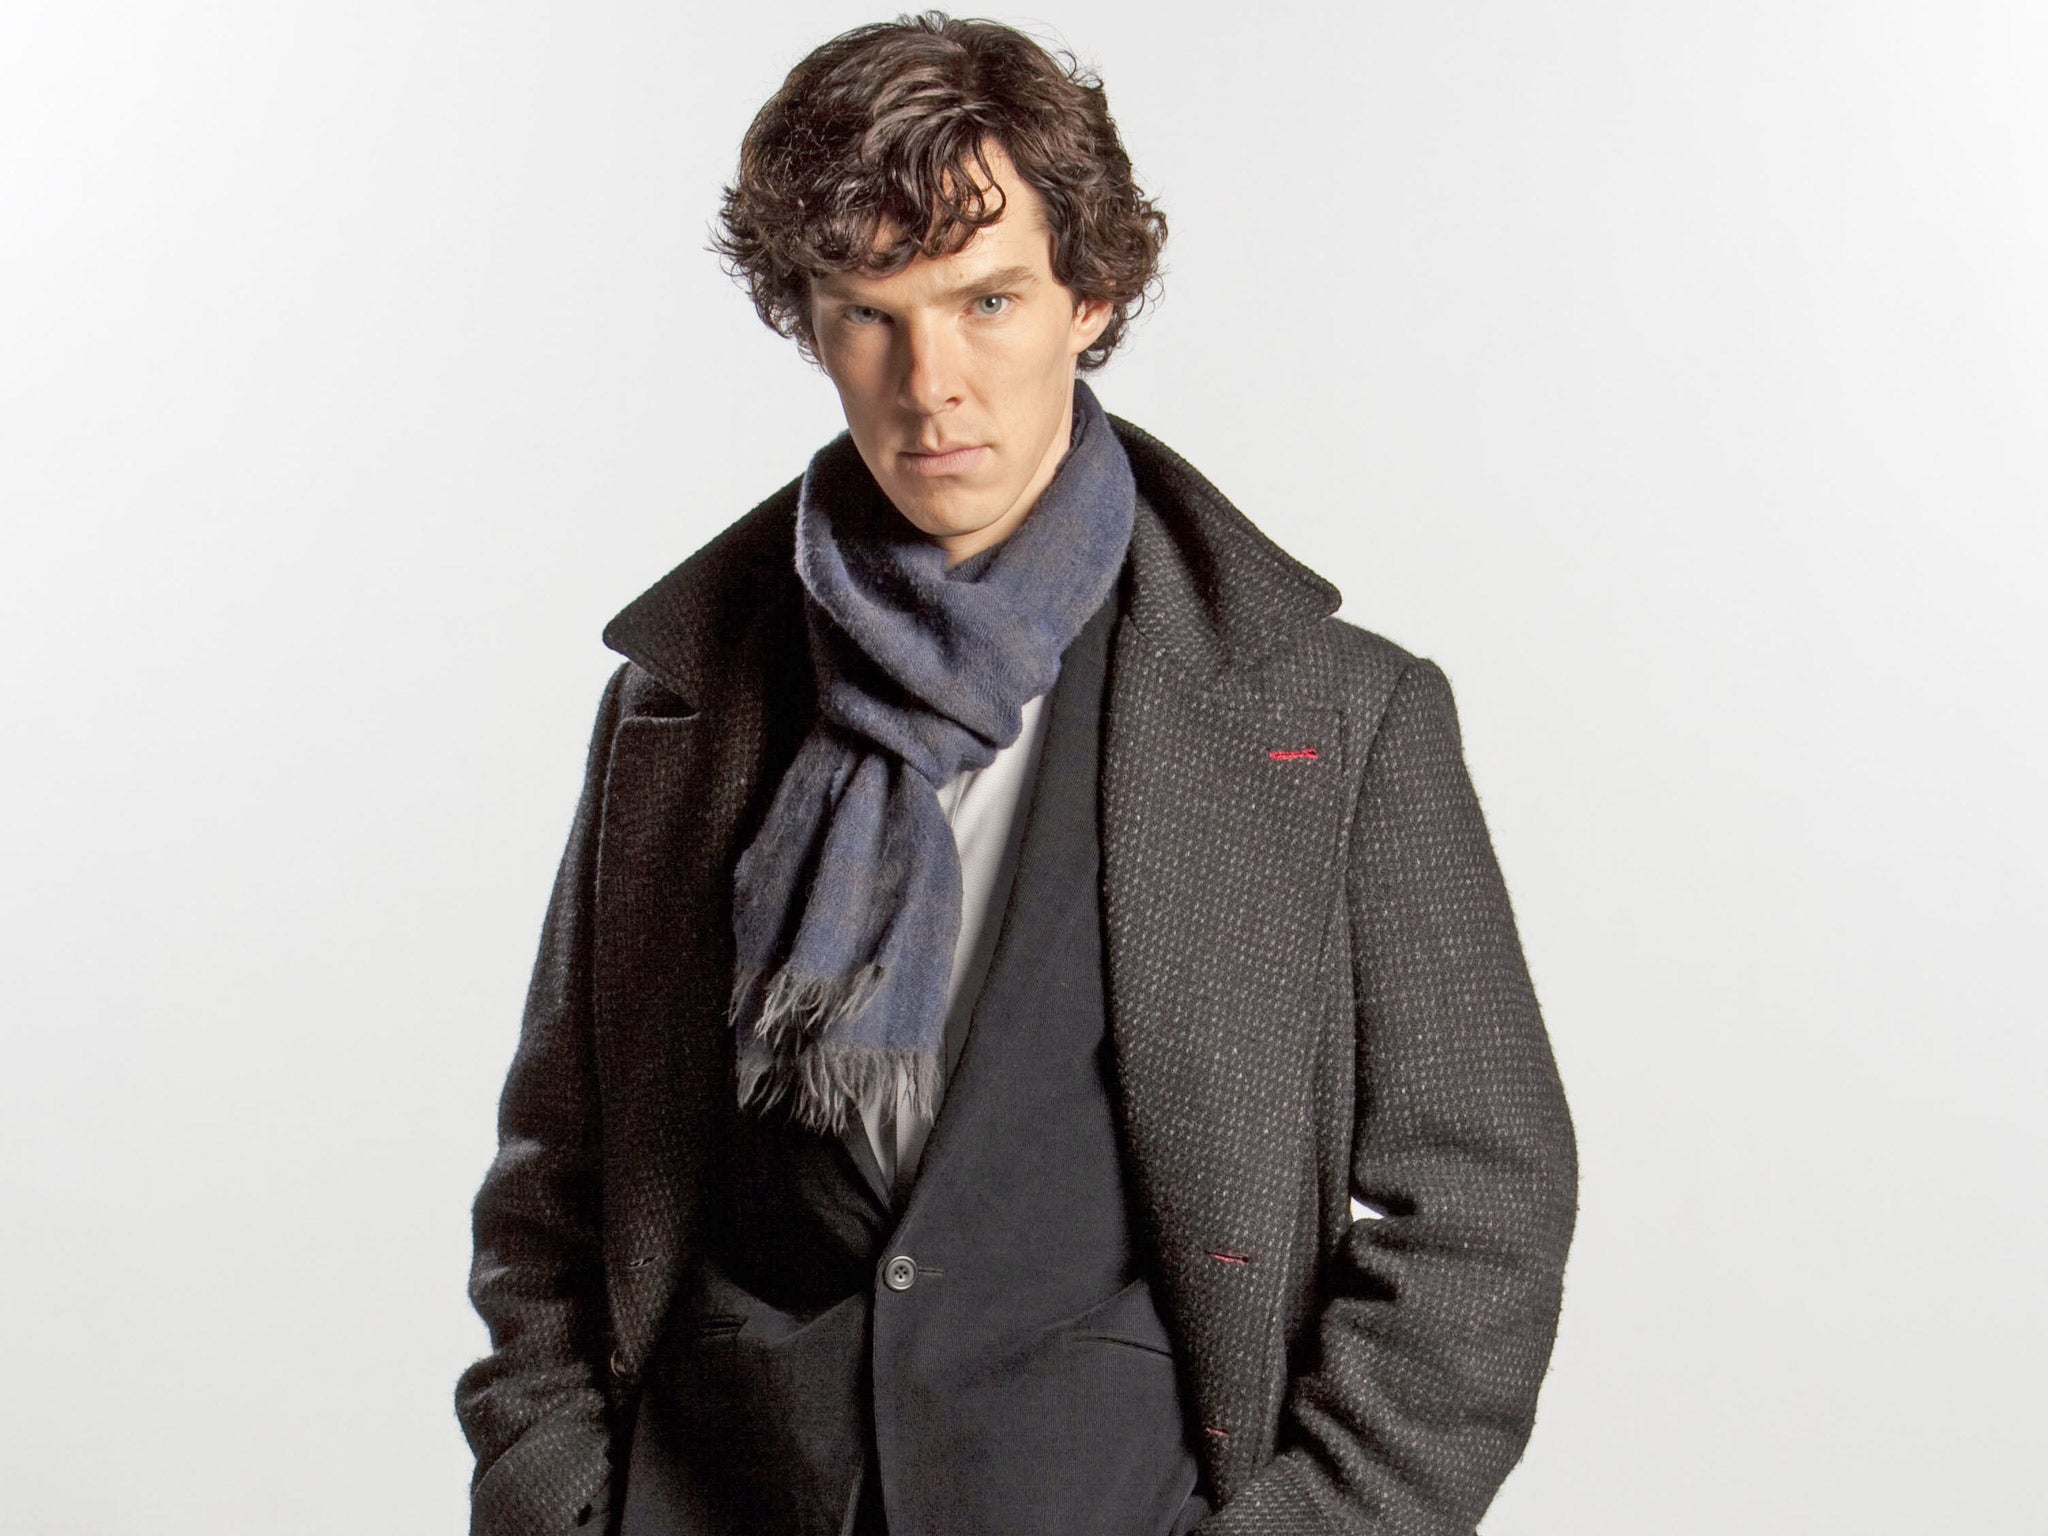 Benedict Cumberbatch stars as the lead in BBC drama Sherlock